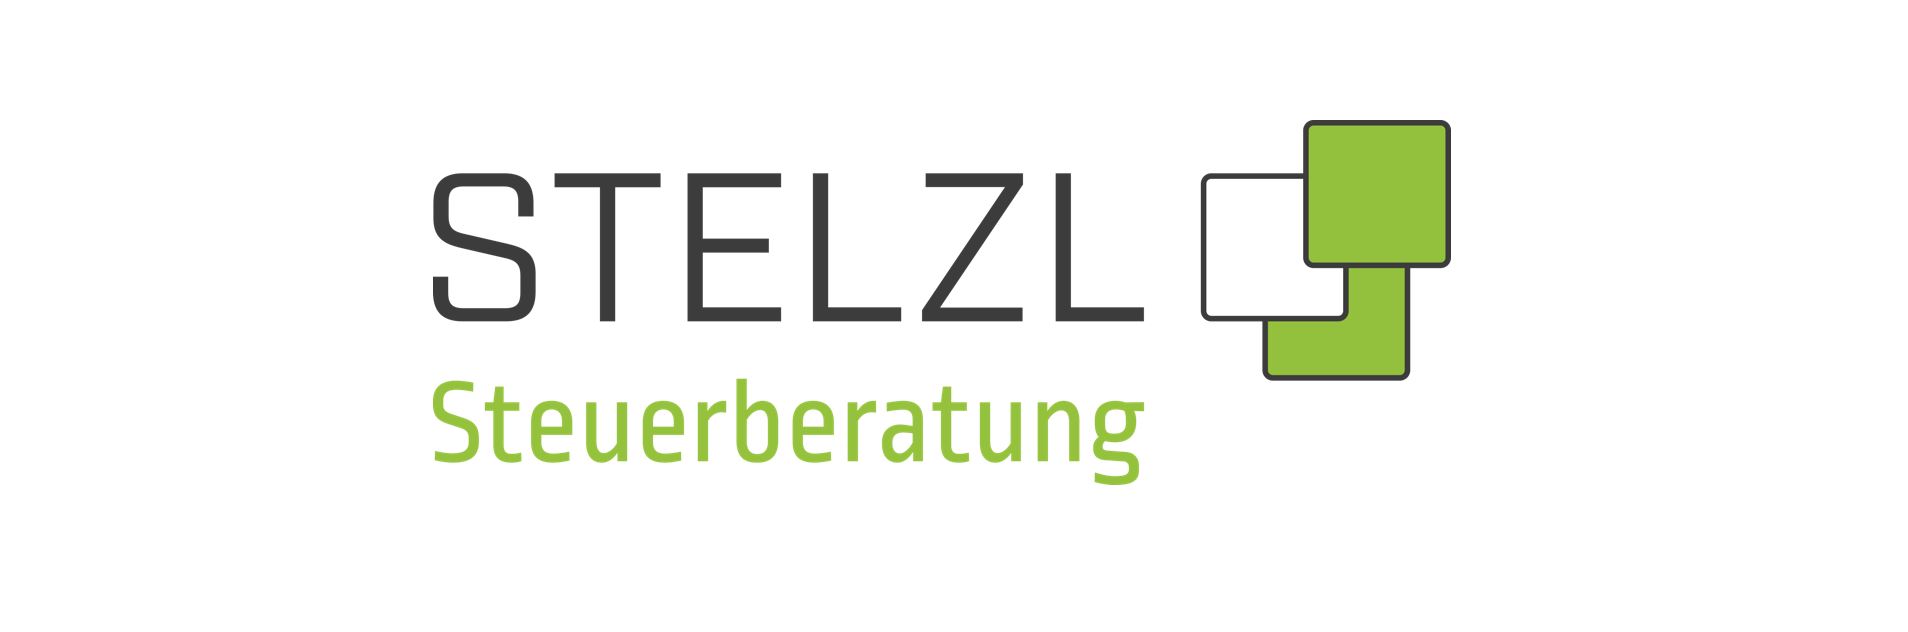 STELZL-Steuerberatung_slider2